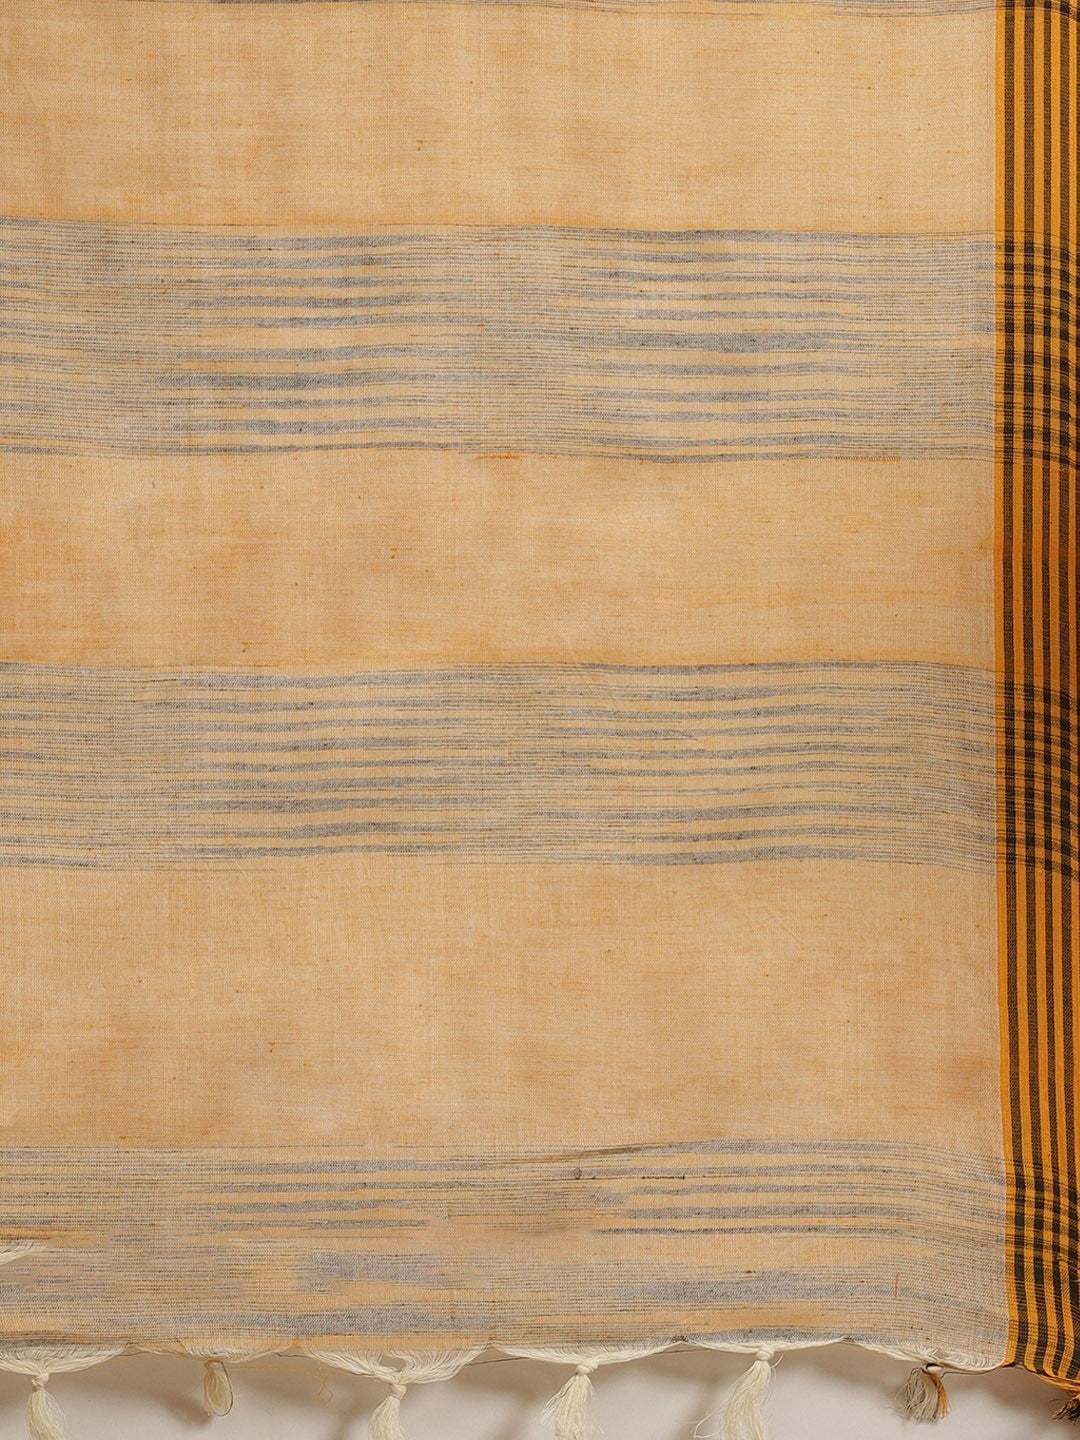 Women's Beige Cotton Silk Printed Saree - Ahika